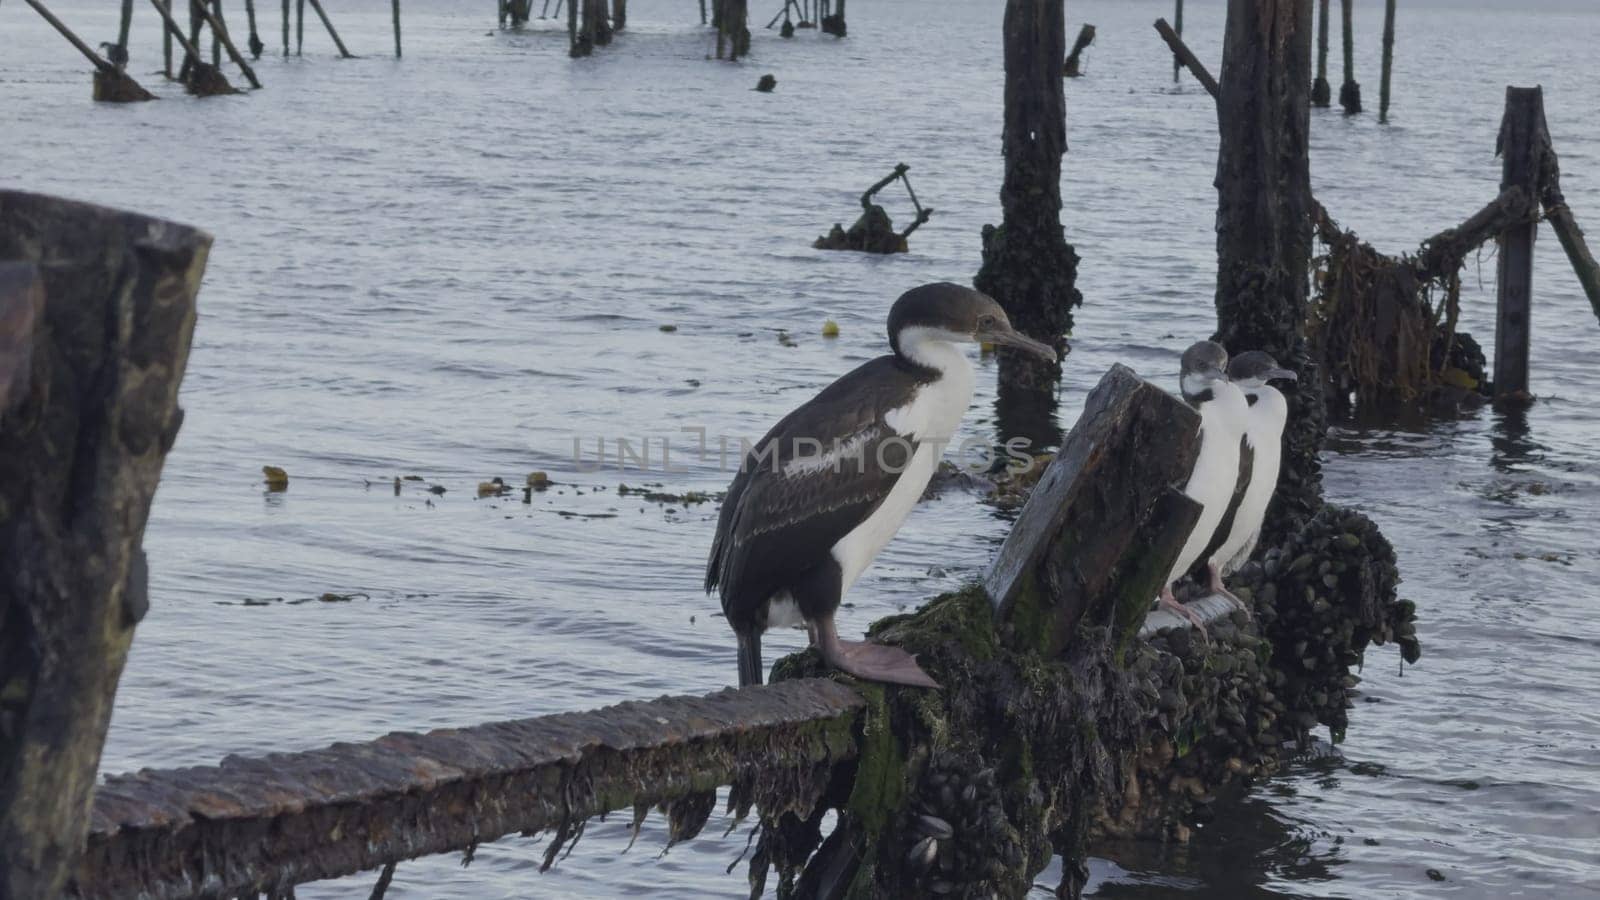 Emperor Cormorant Pecking Wooden Pier as Others Rest by FerradalFCG